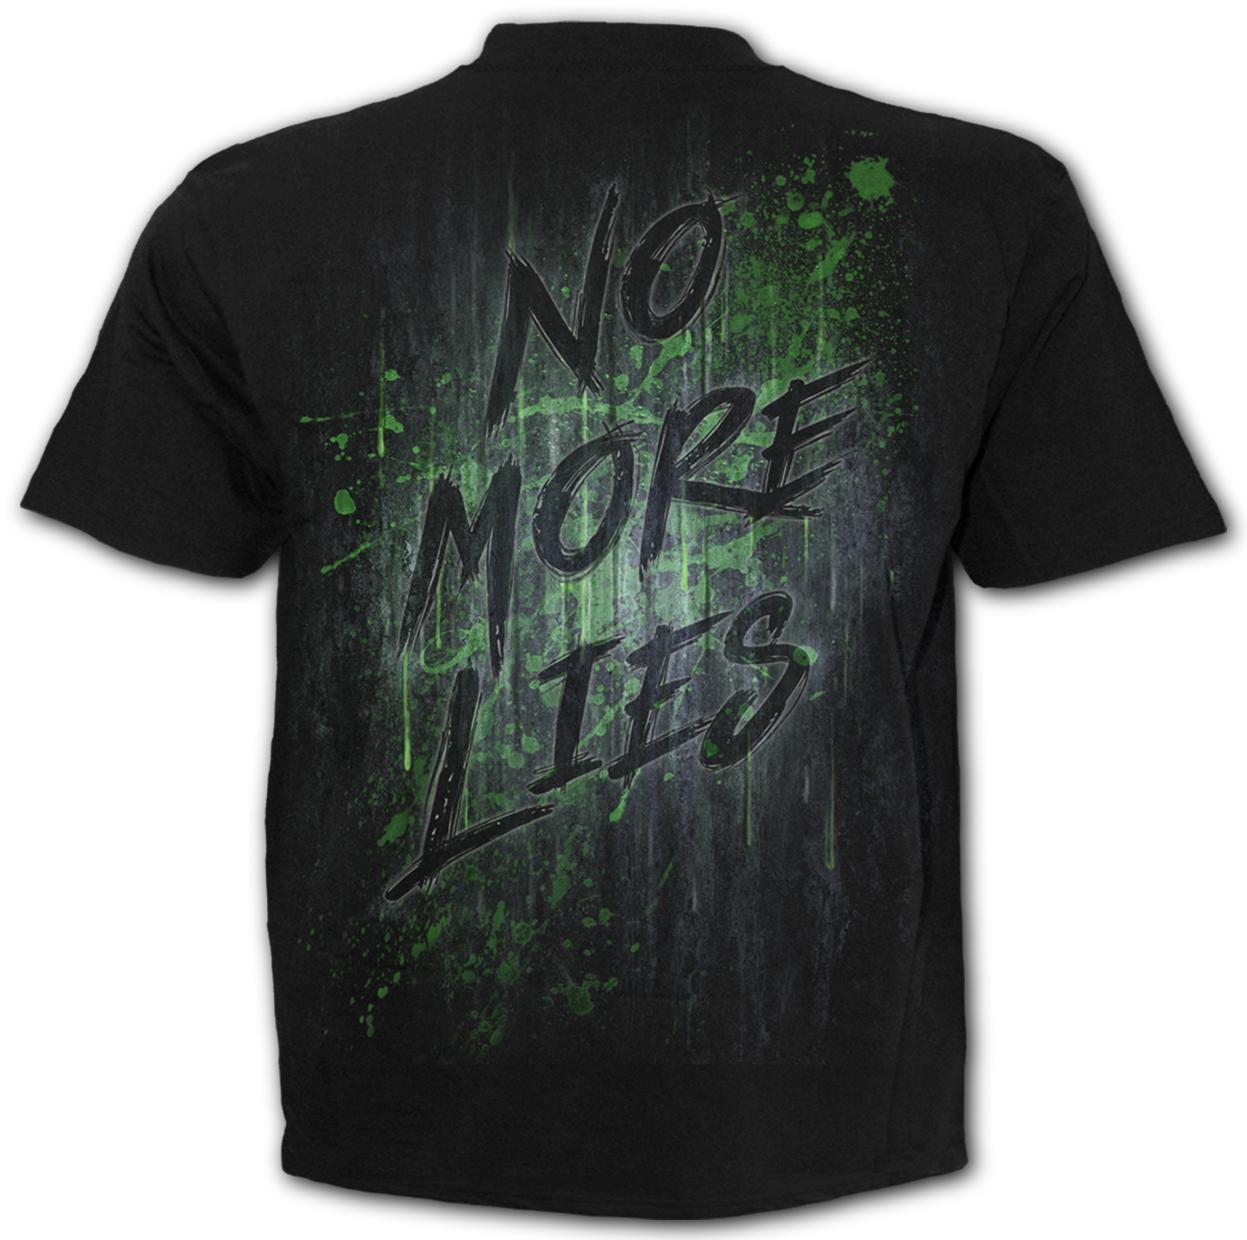 Riddler - No More Lies - T-Shirt Black